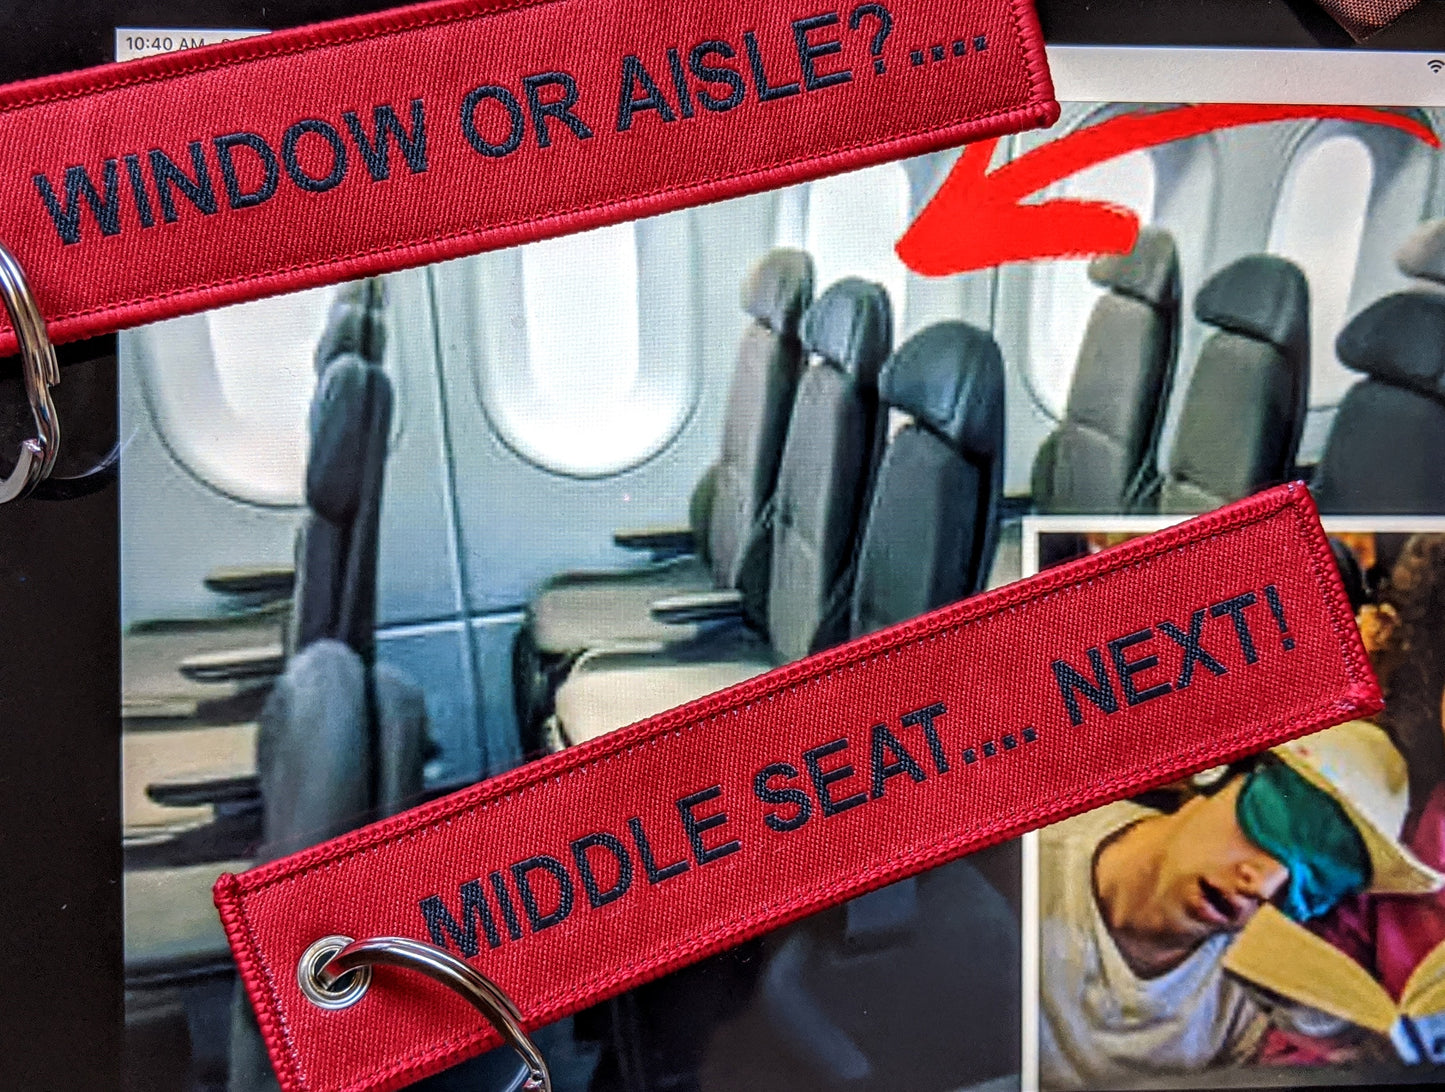 WINDOW OR AISLE? Luggage Tag